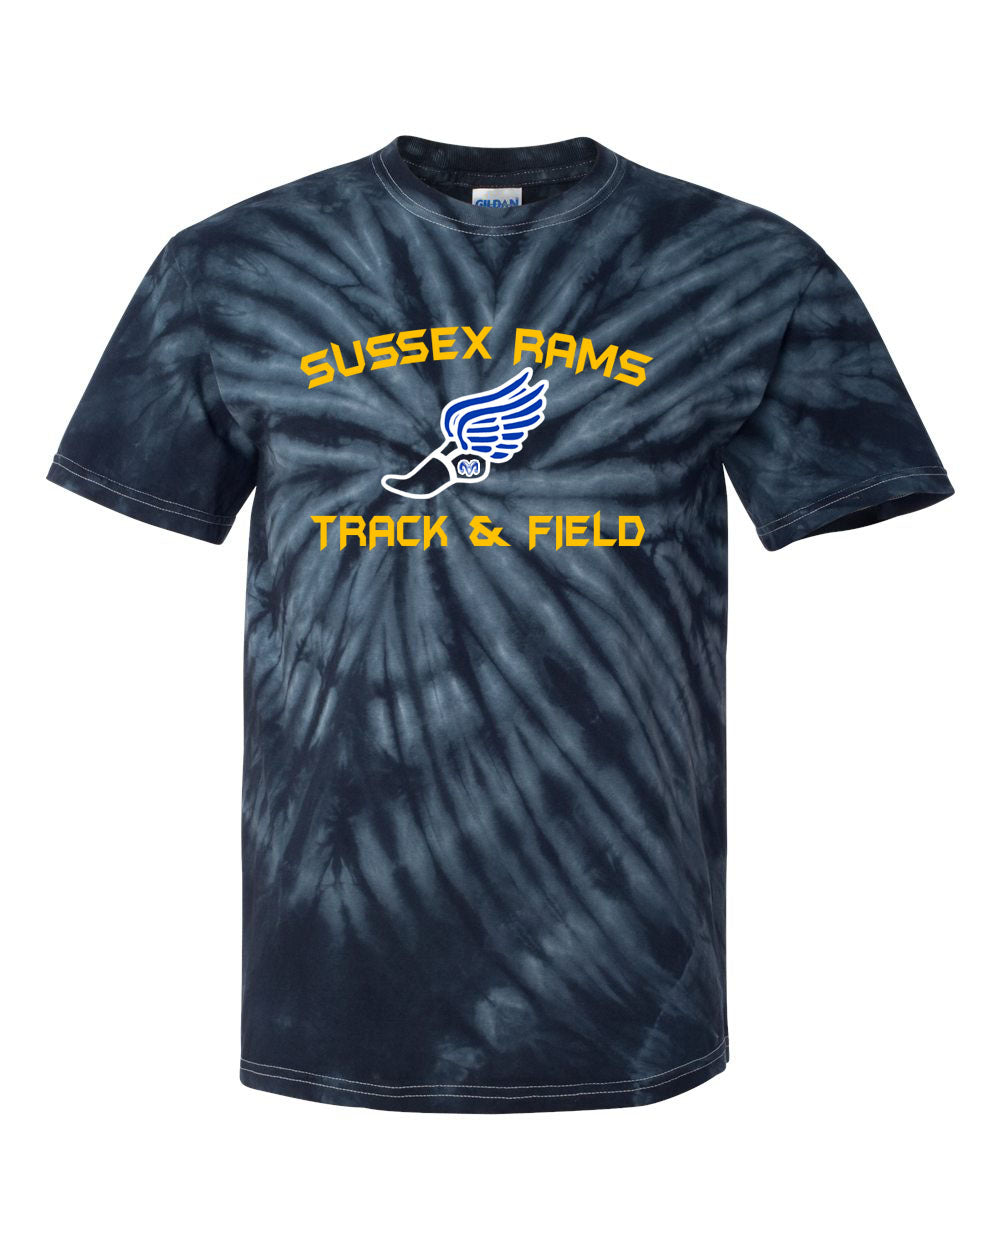 Sussex Rams Track Tie Dye t-shirt Design 2